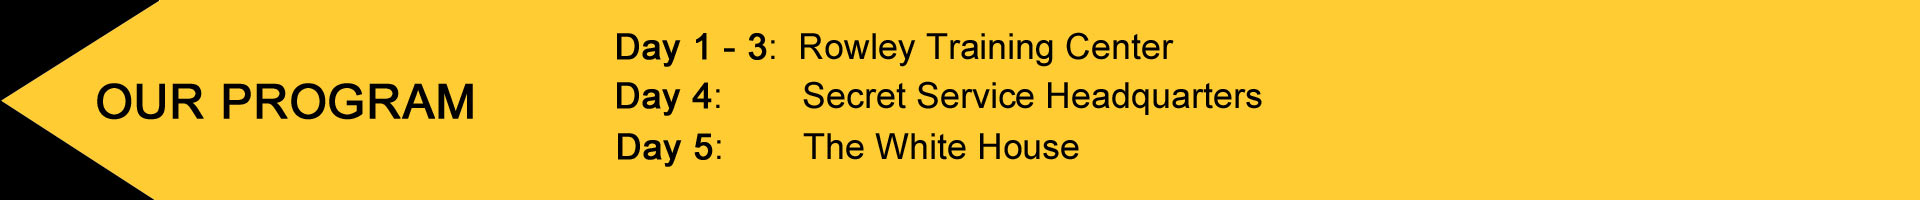 Secret Service training program agenda